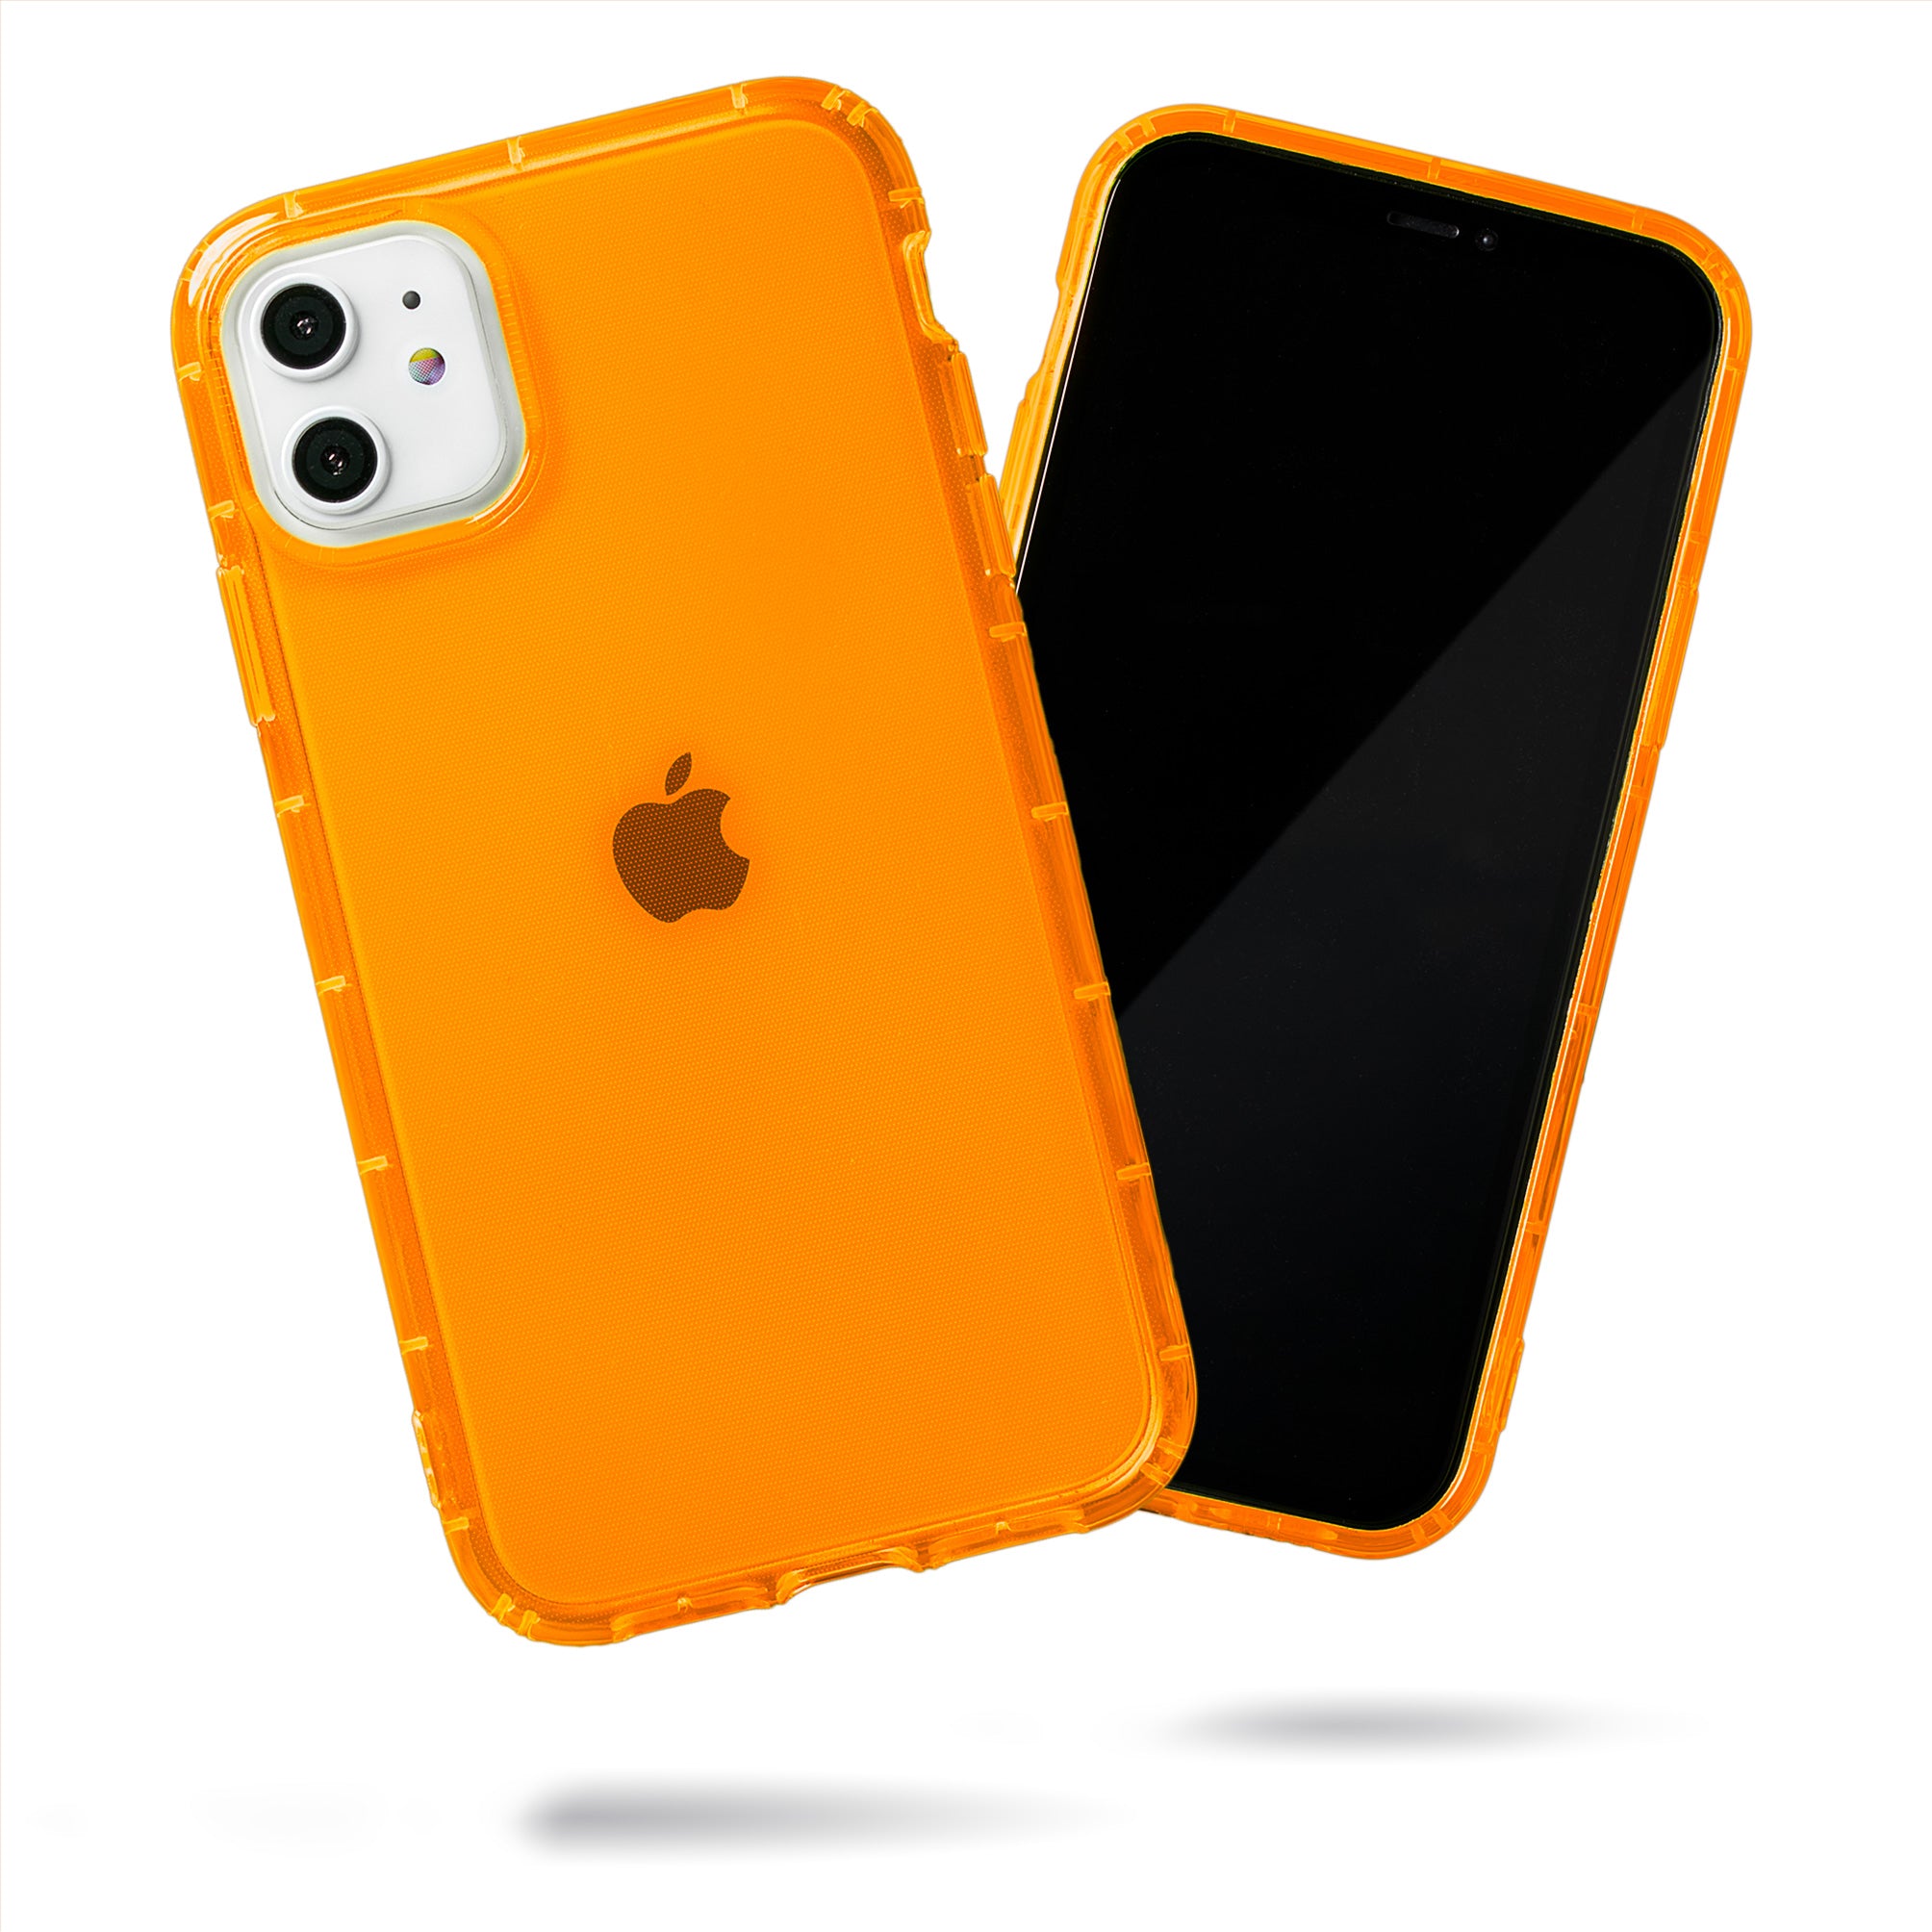 Highlighter Case for iPhone 11 - Intense Bright Orange